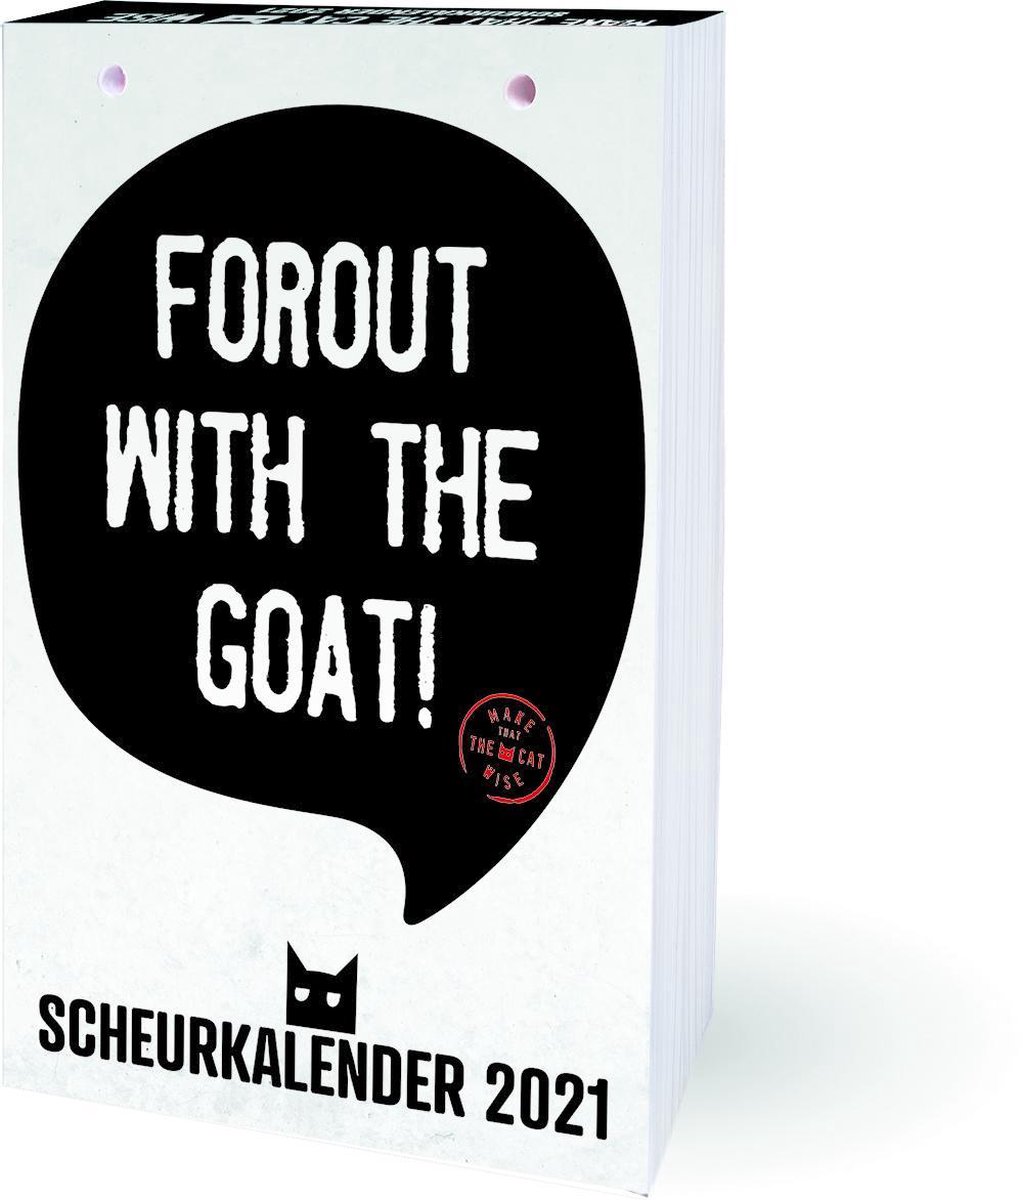 Scheurkalender - 2021 - Make that the cat wise - Interstat